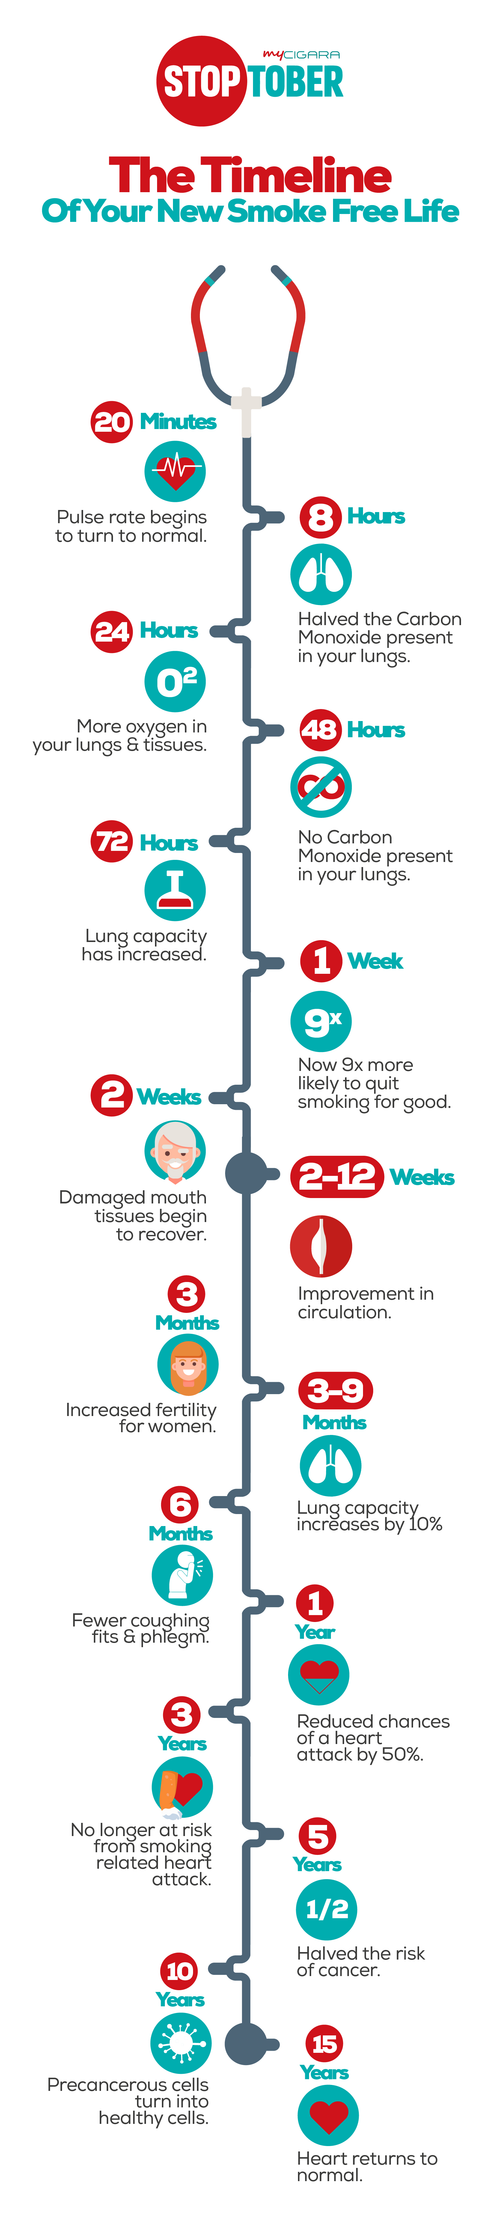 15 Quit Smoking Timeline Milestones - What Happens When You Quit - Aeris